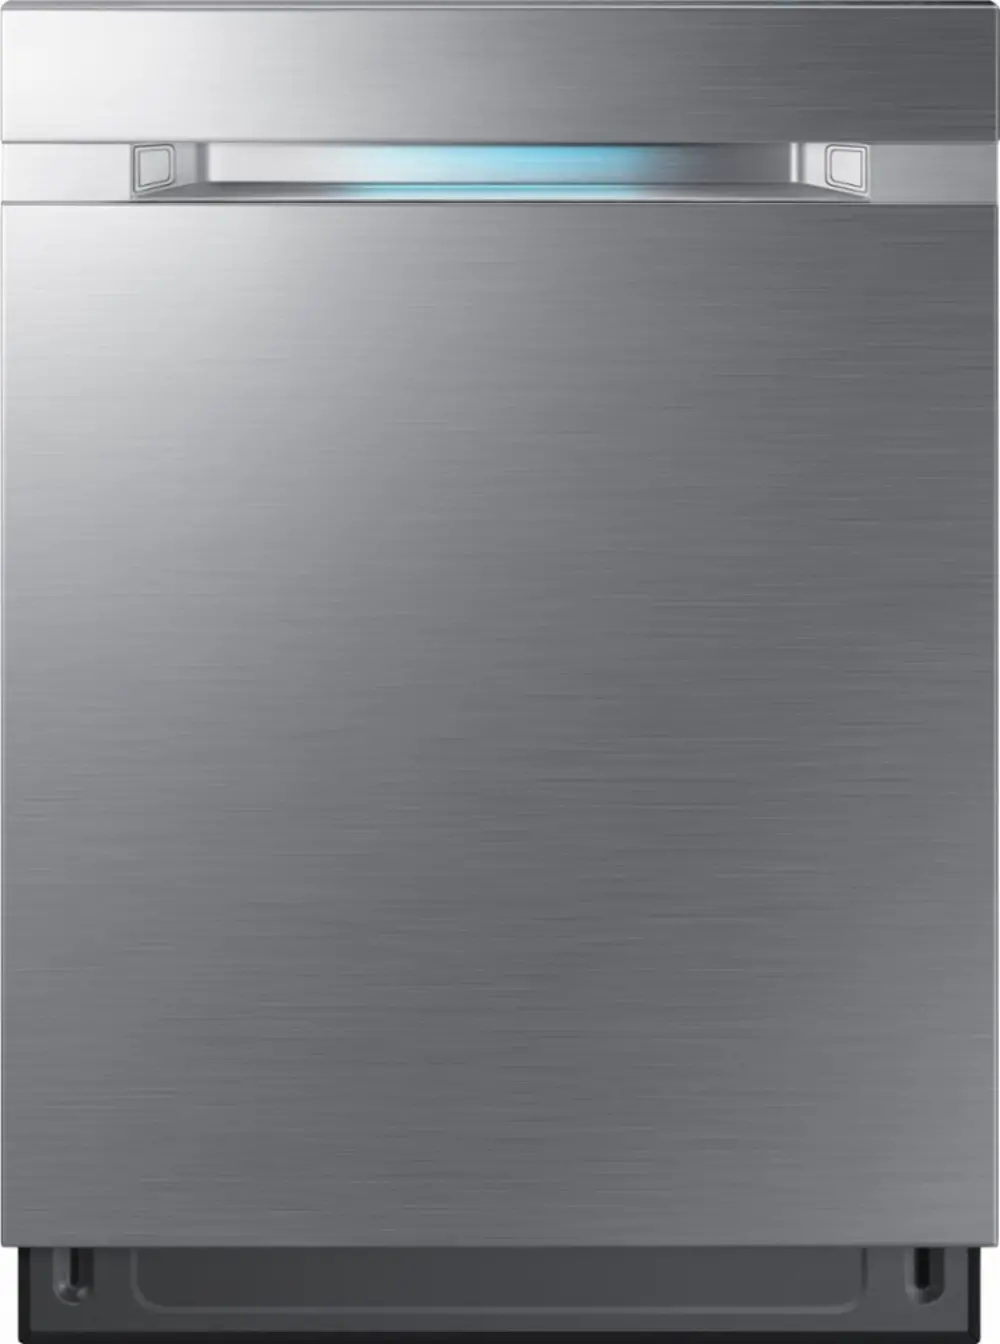 DW80M9550US Samsung Dishwasher - Stainless Steel-1